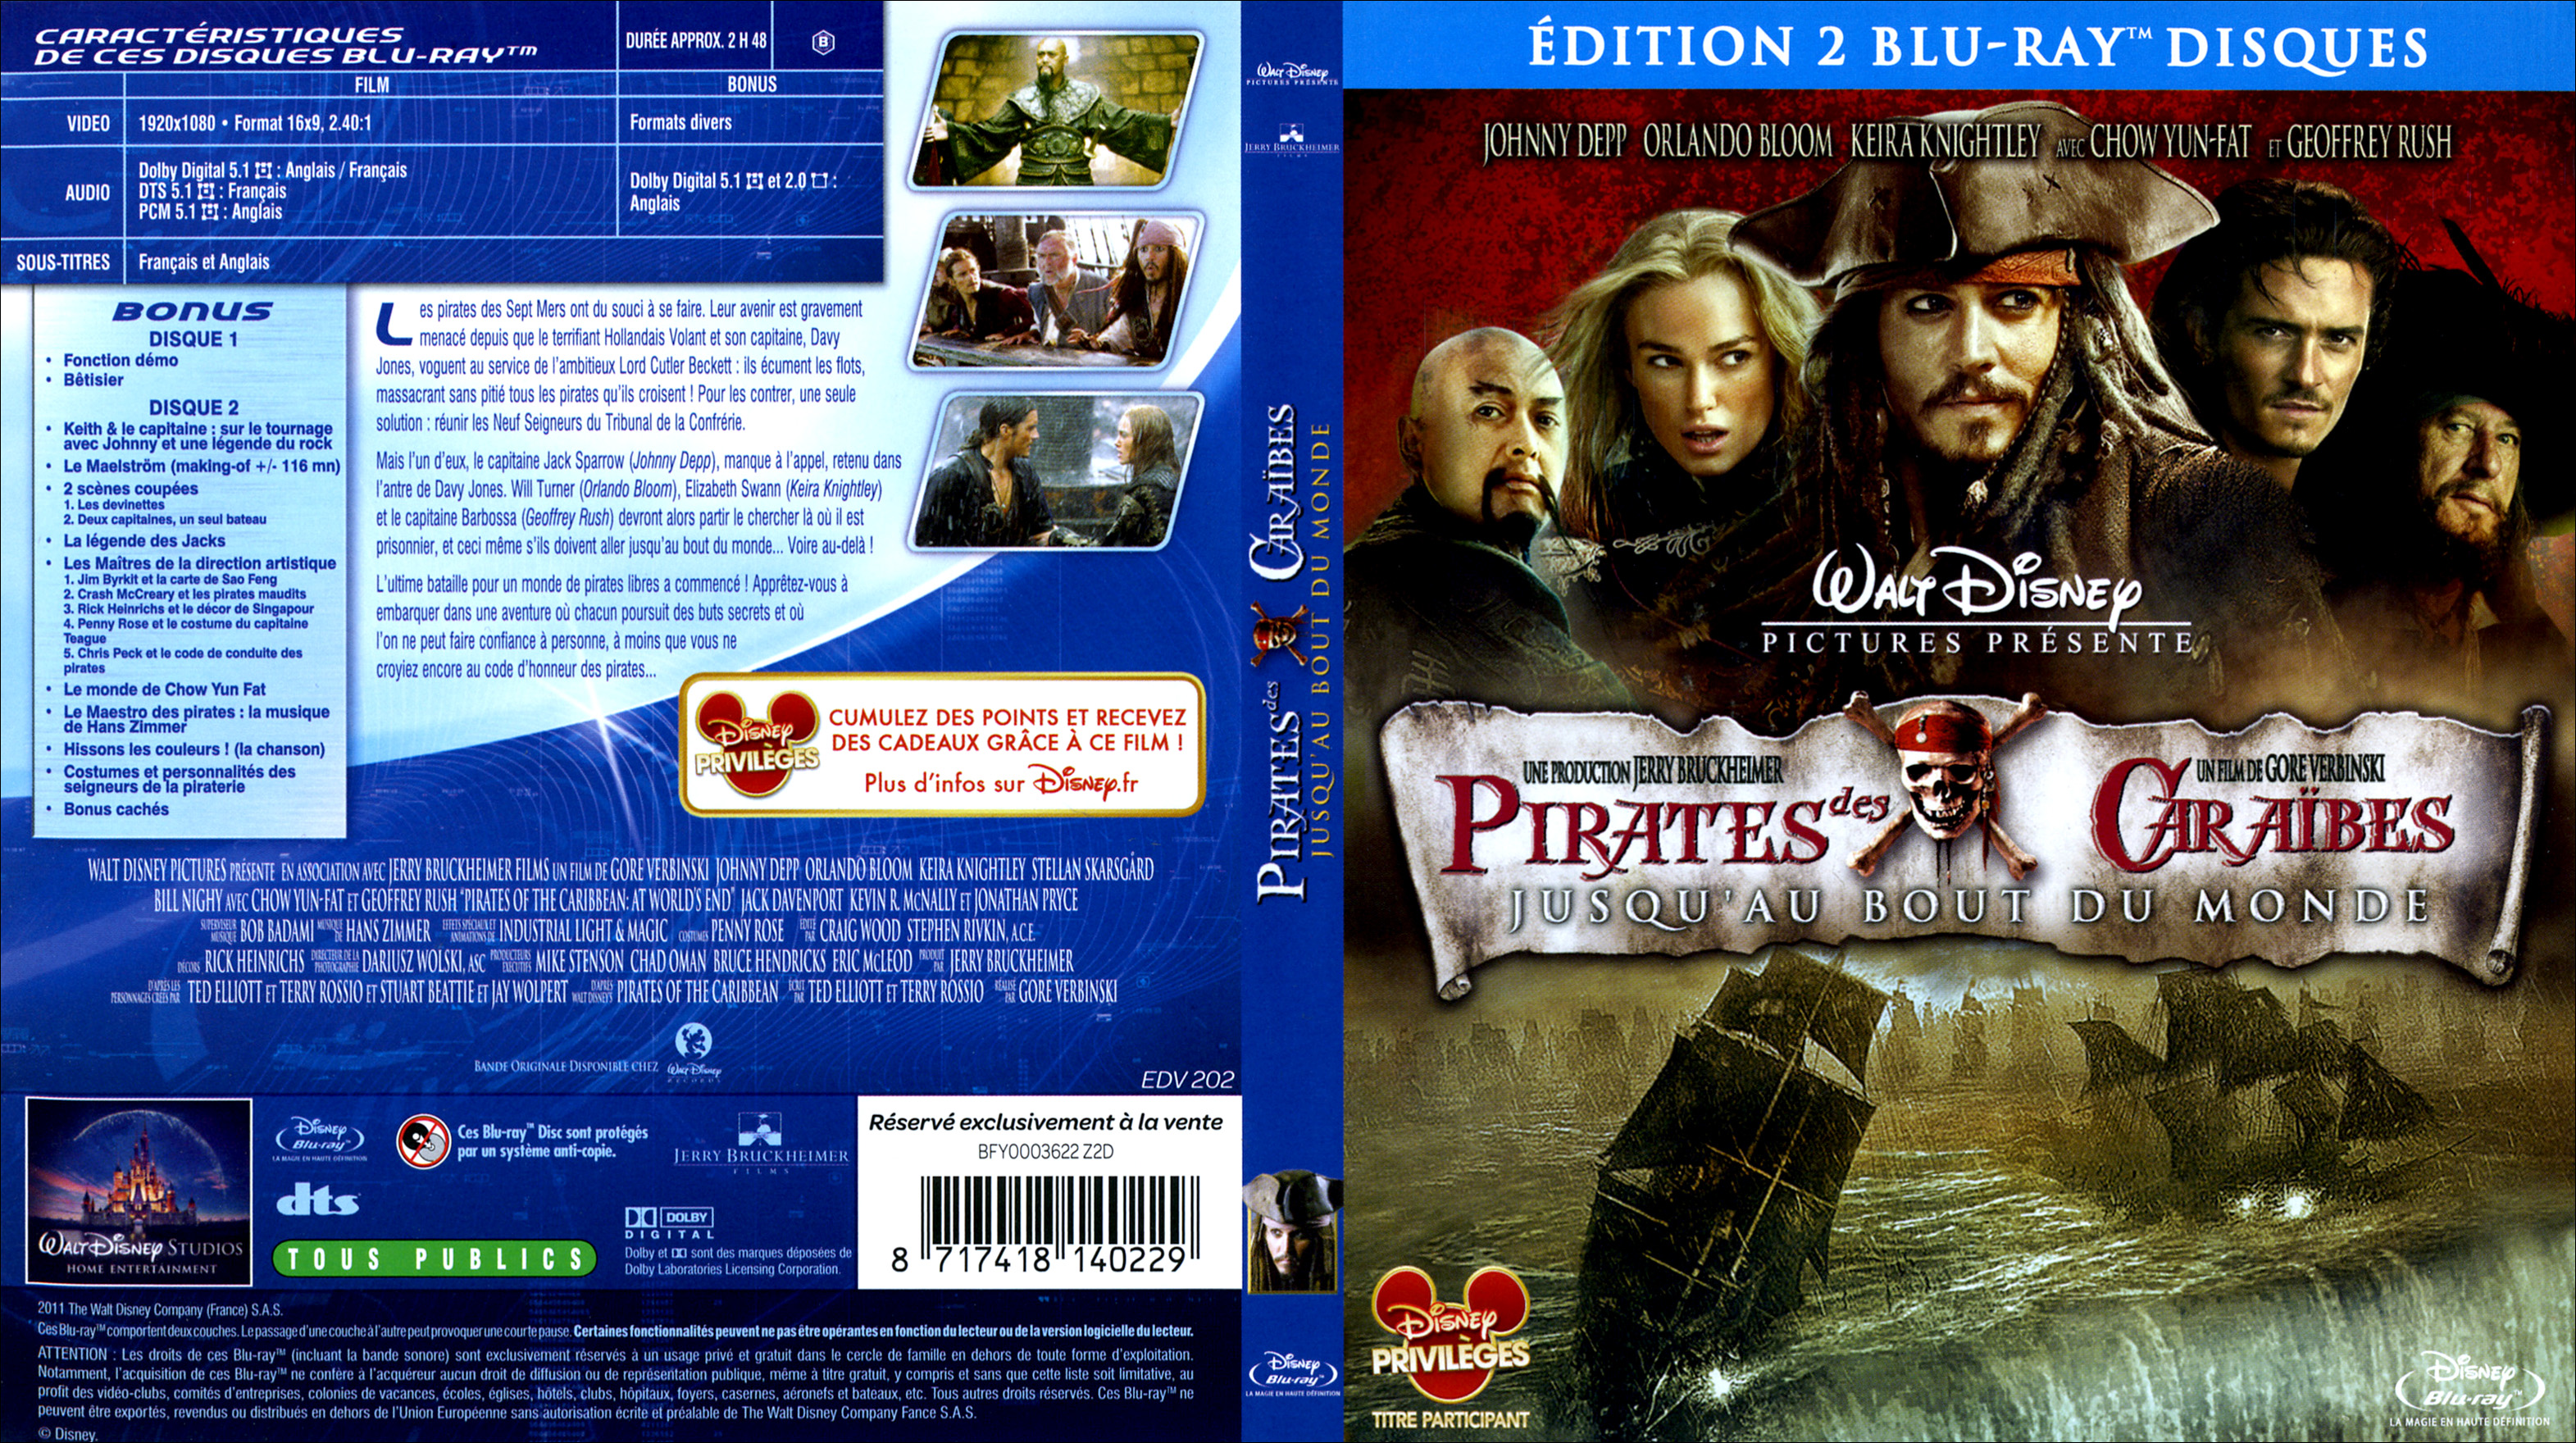 Jaquette DVD Pirates des Caraibes 3 (BLU-RAY) v3